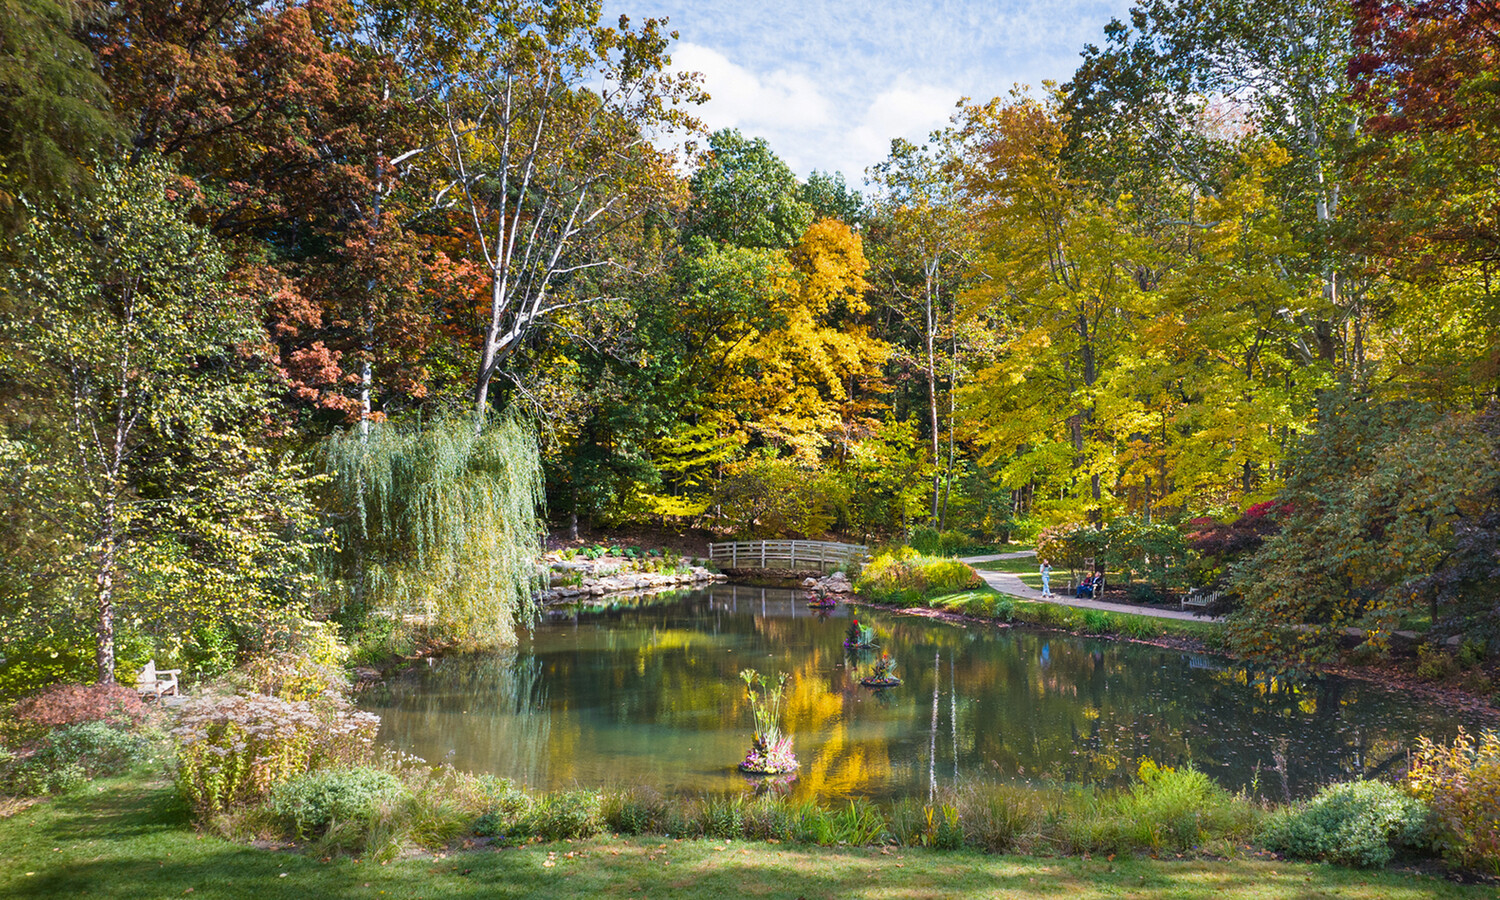 The Edith J. Carrier Arboretum